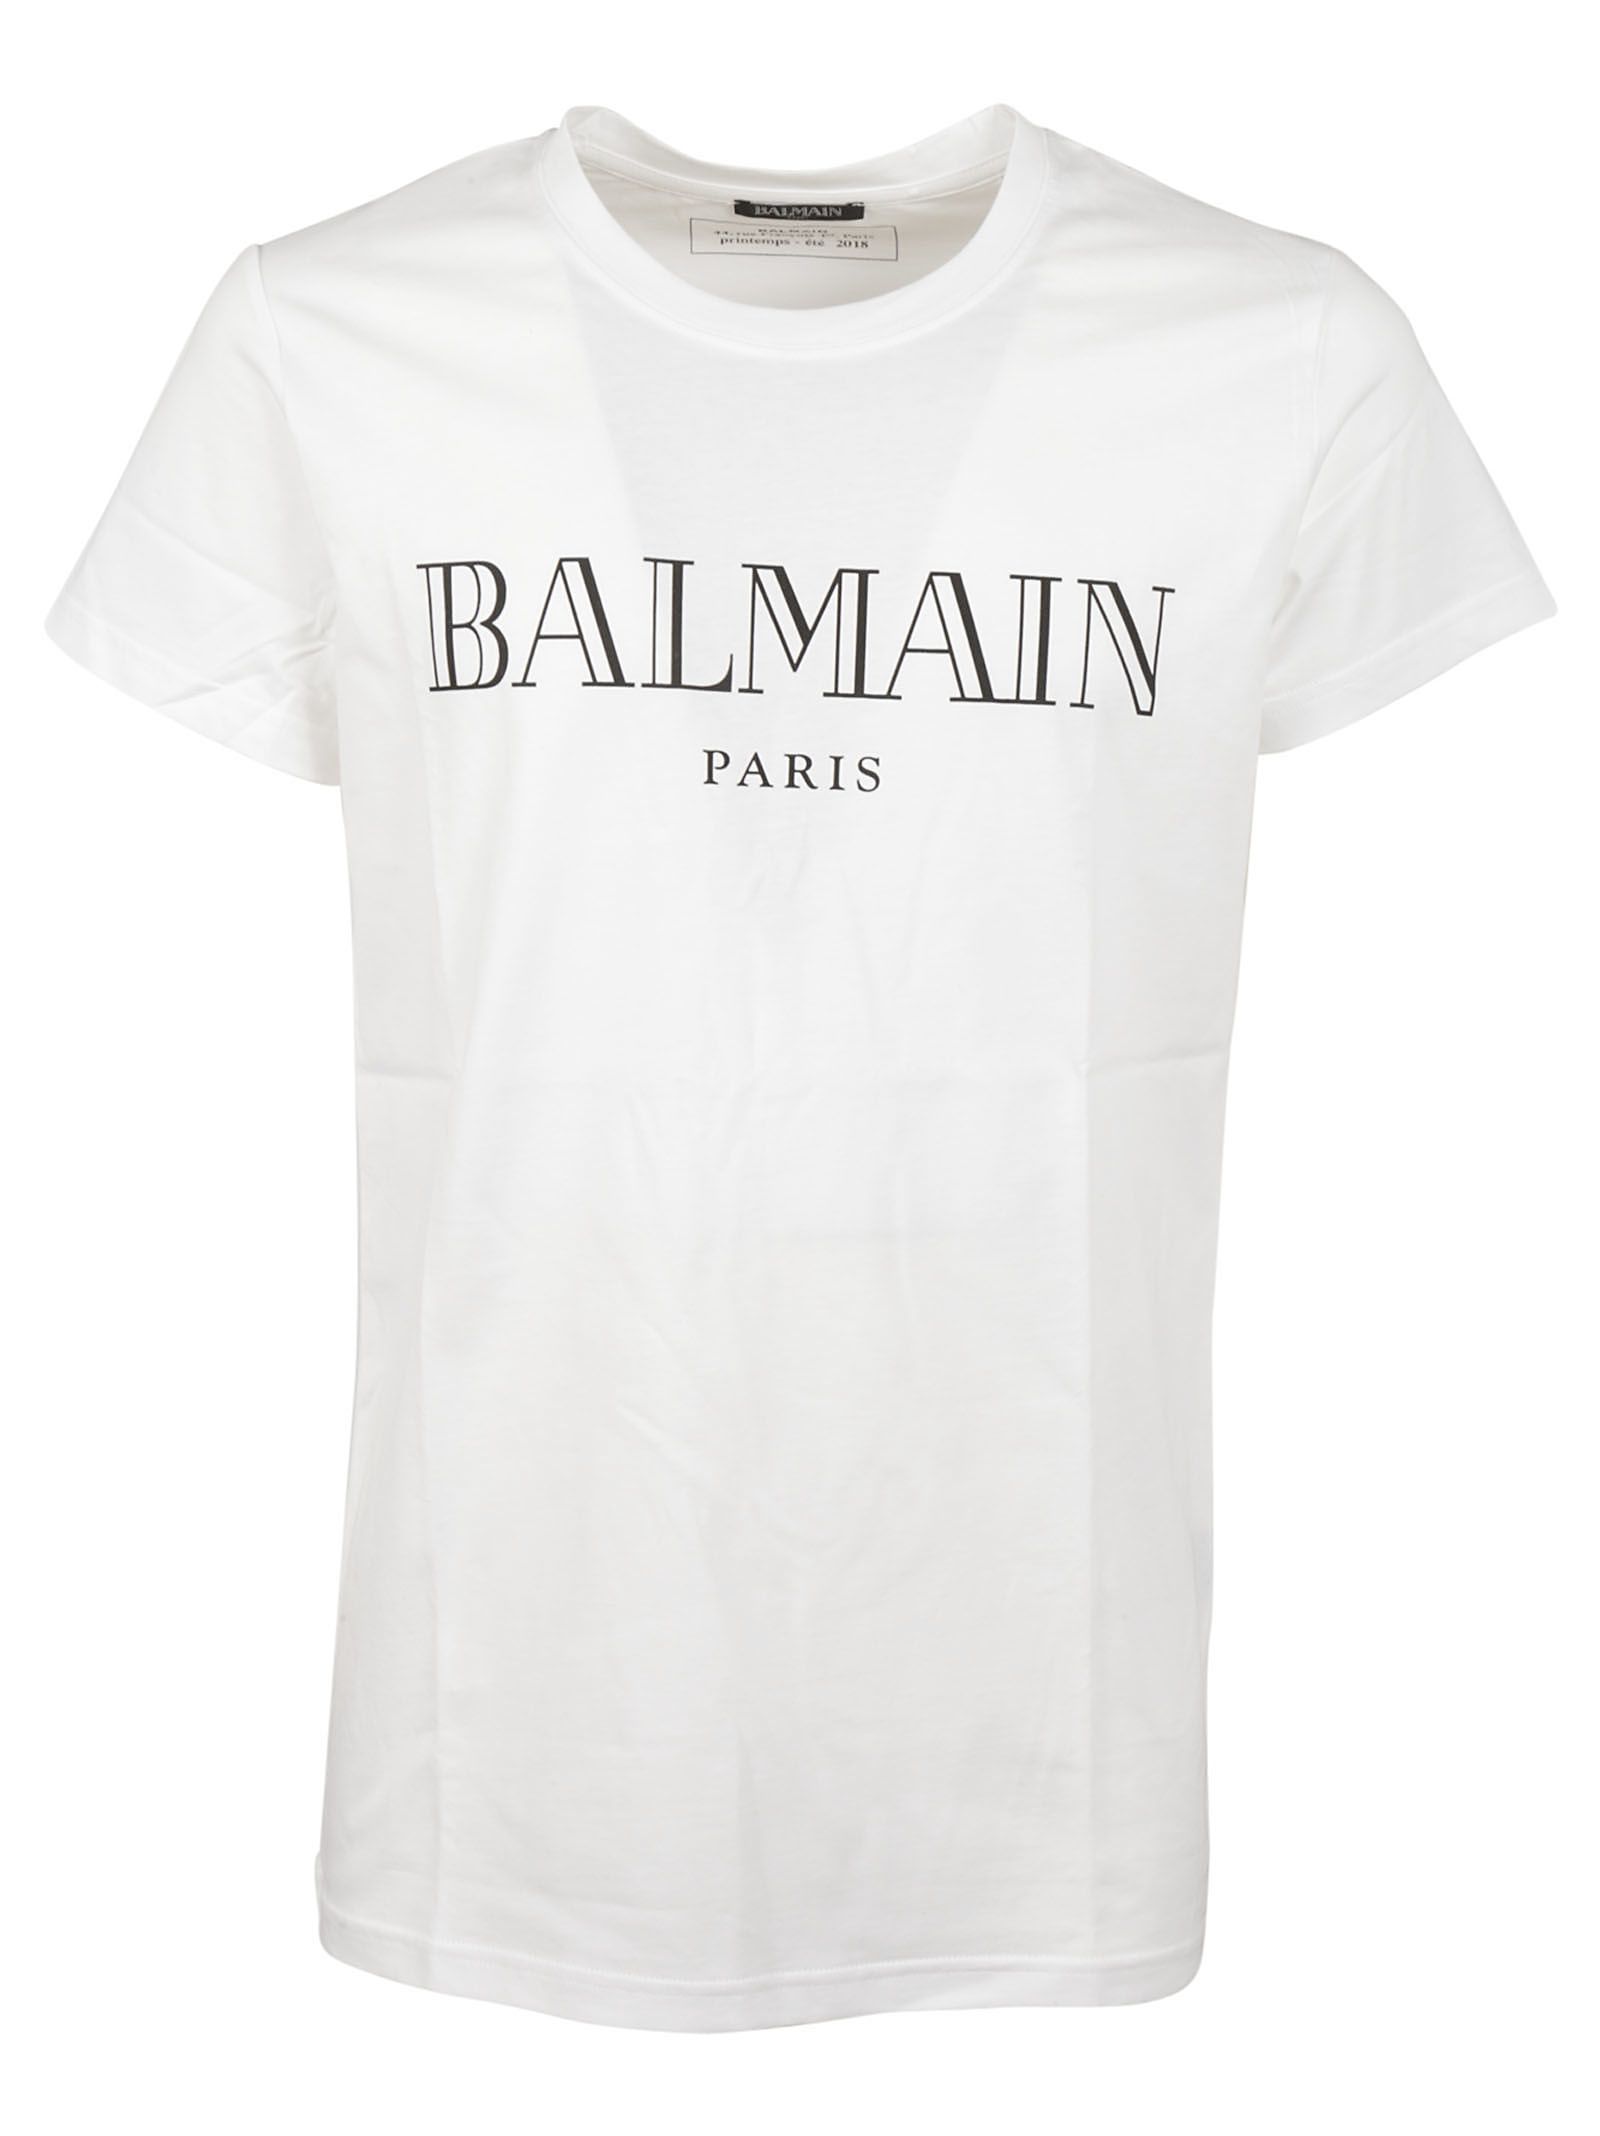 BALMAIN Logo Printed Cotton Jersey T-Shirt, White/Black | ModeSens